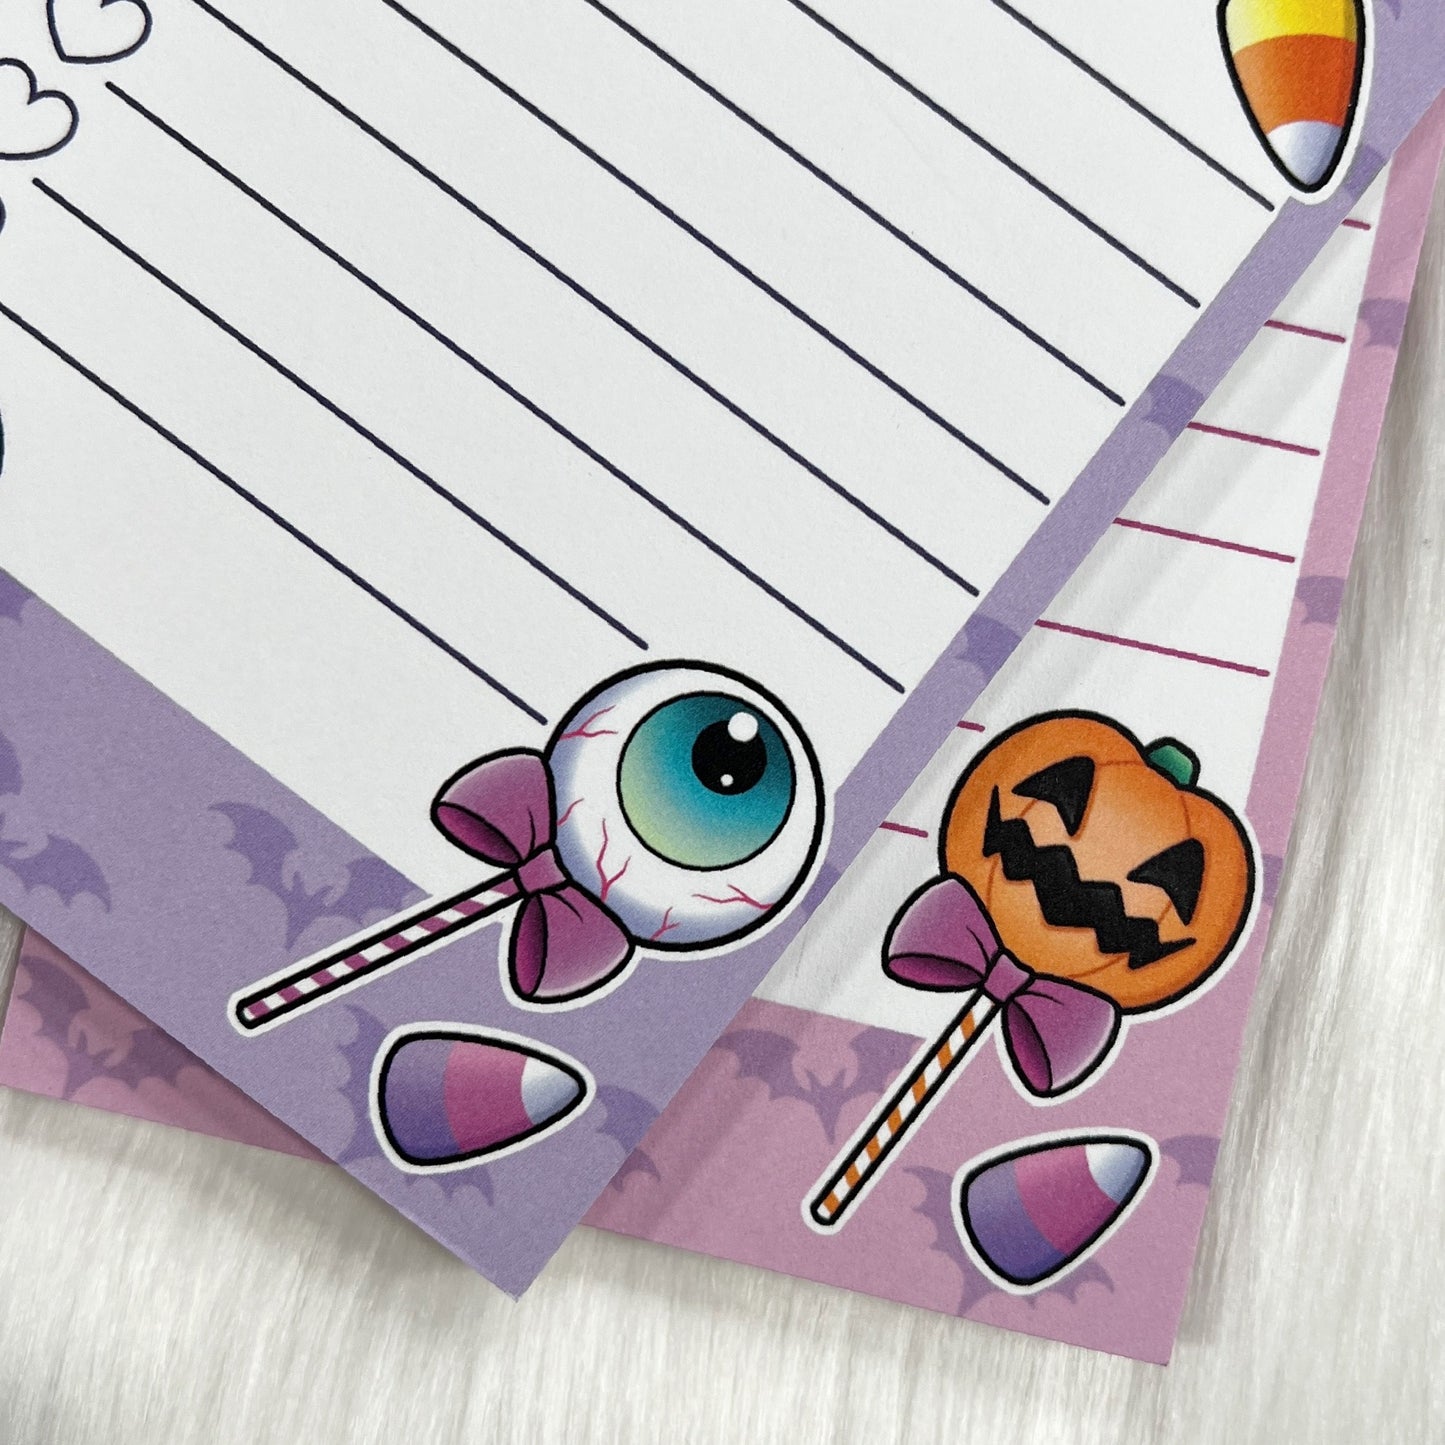 Kawaii Halloween - To Do List - Notepad